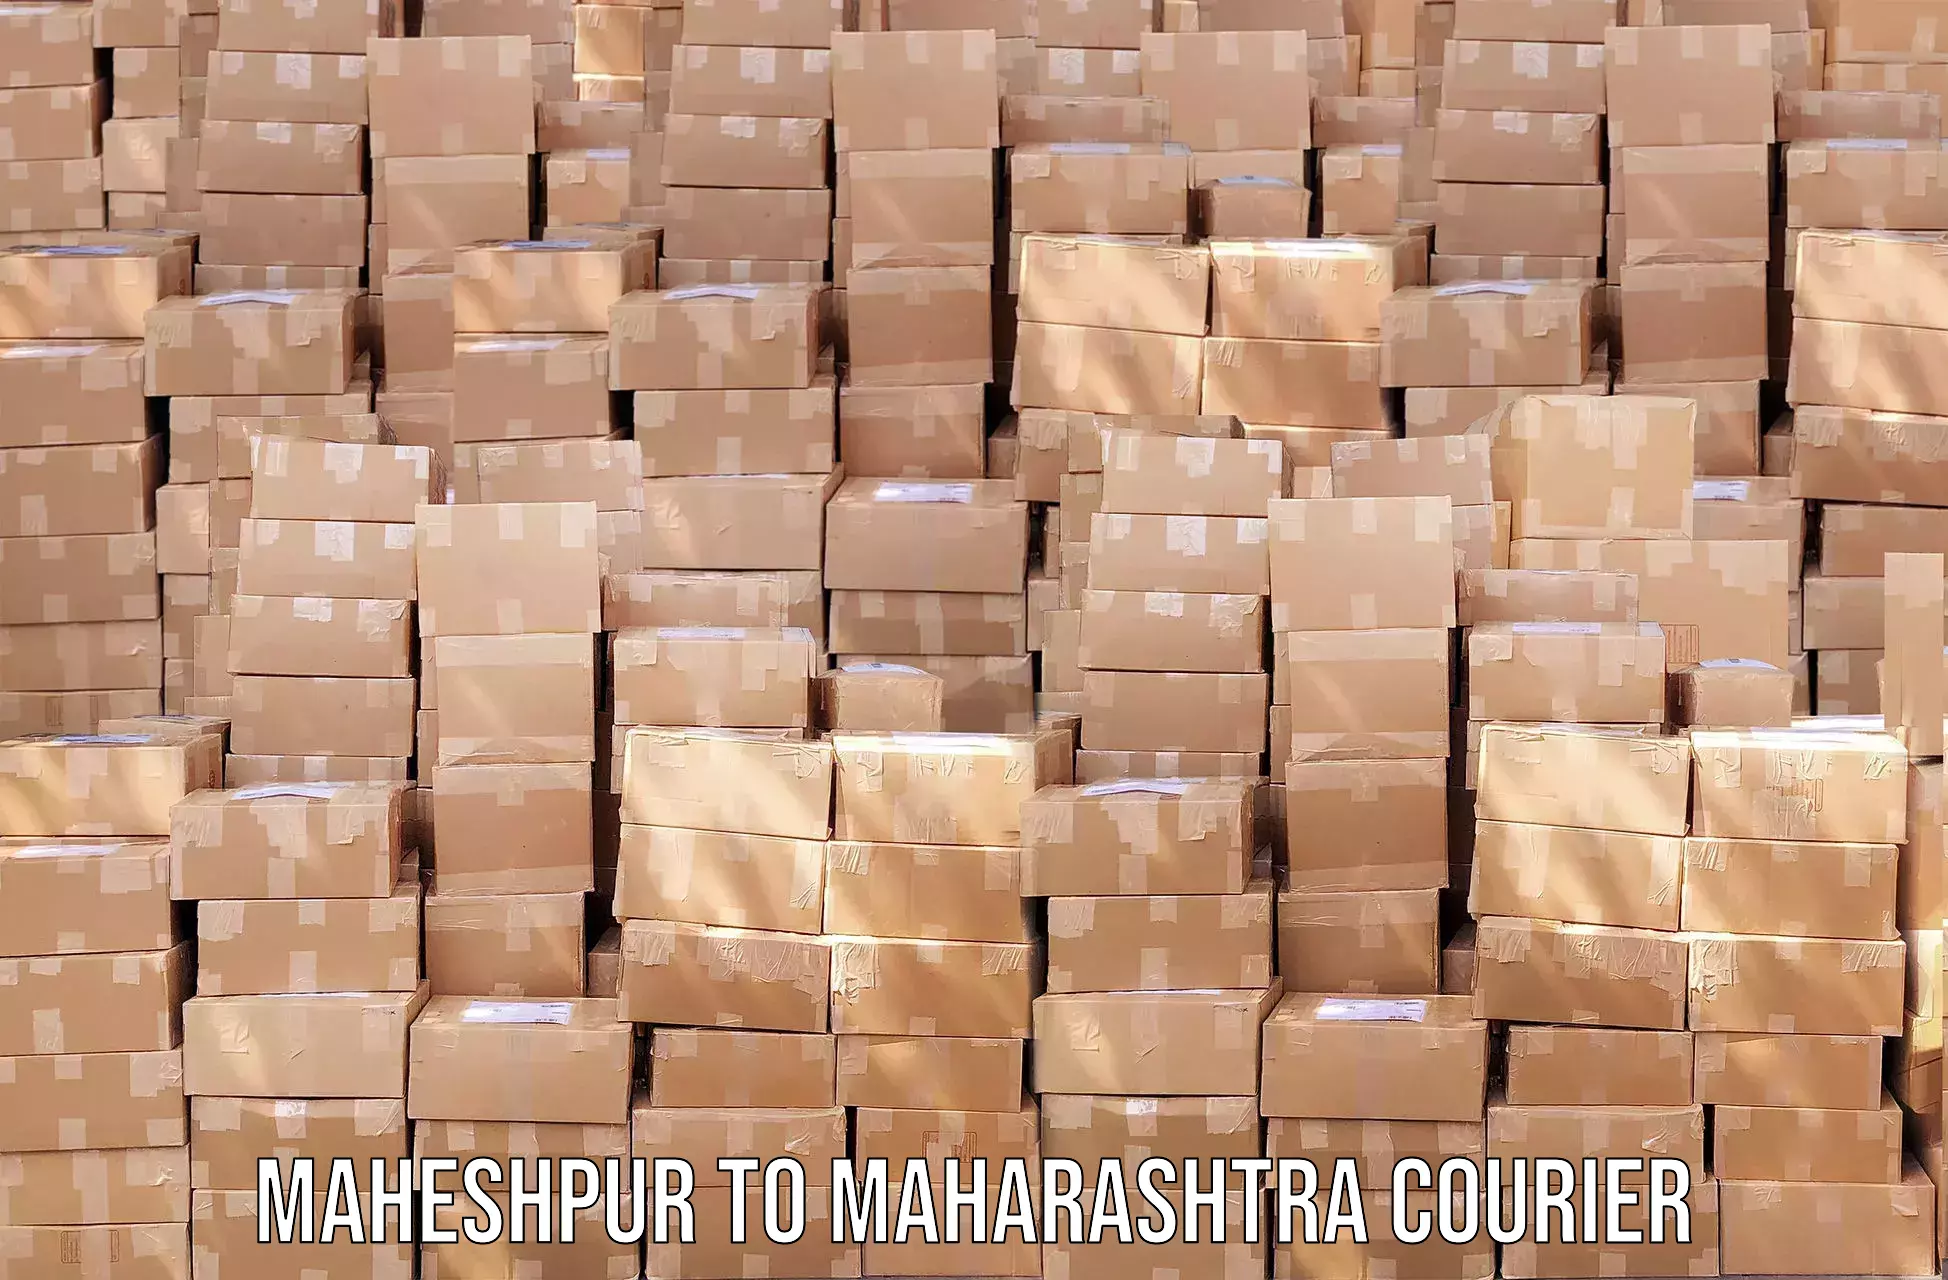 Multi-service courier options Maheshpur to Loni Ahmednagar